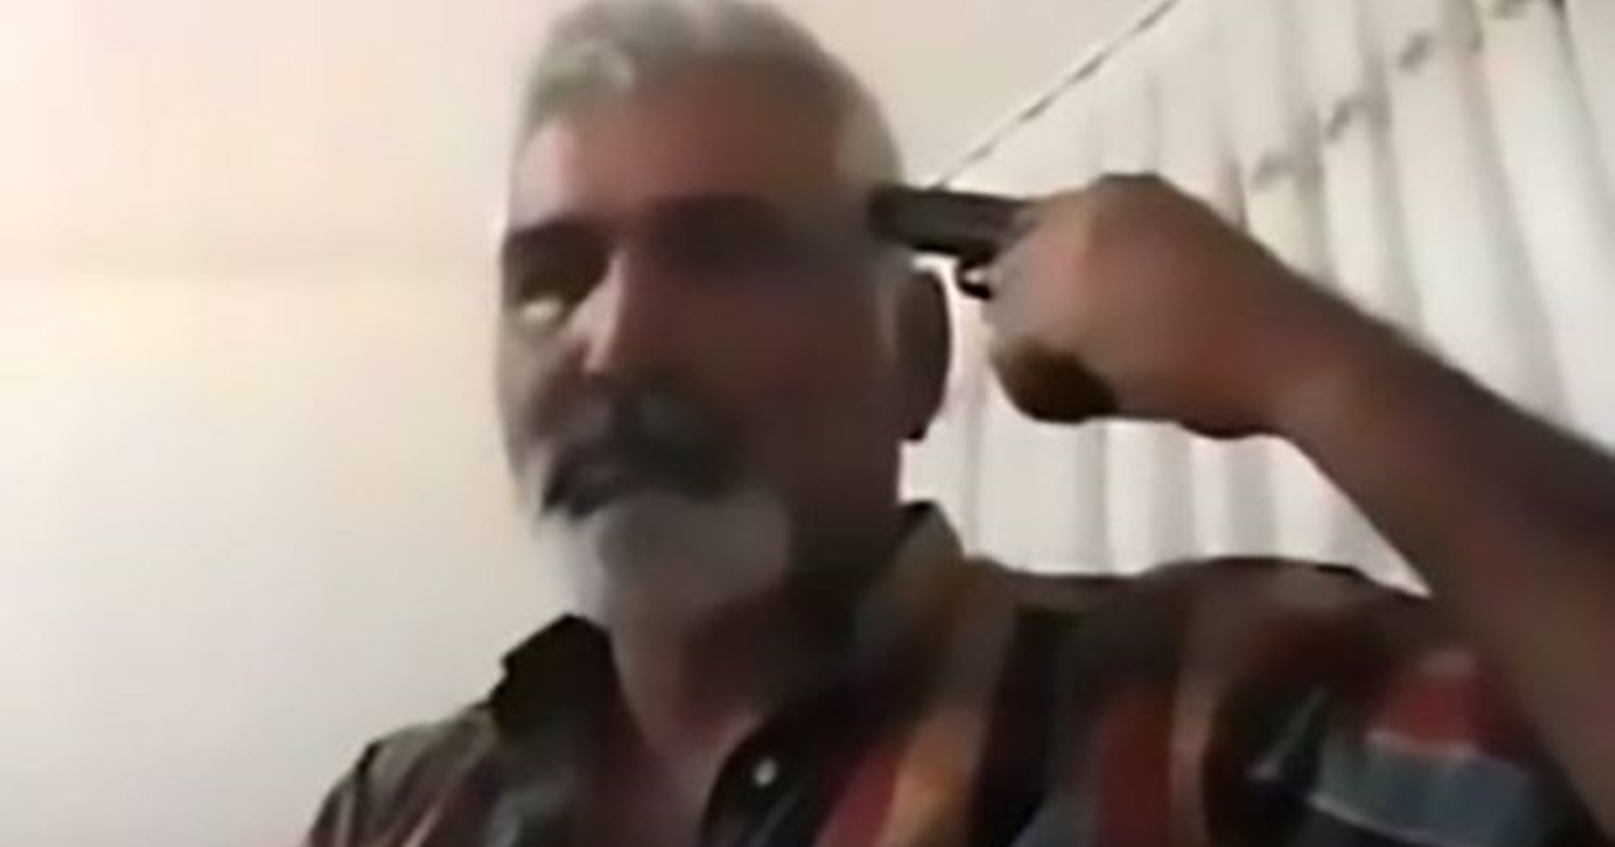 Turkish Man Live Streams Suicide On Facebook After Daughter Got Engaged